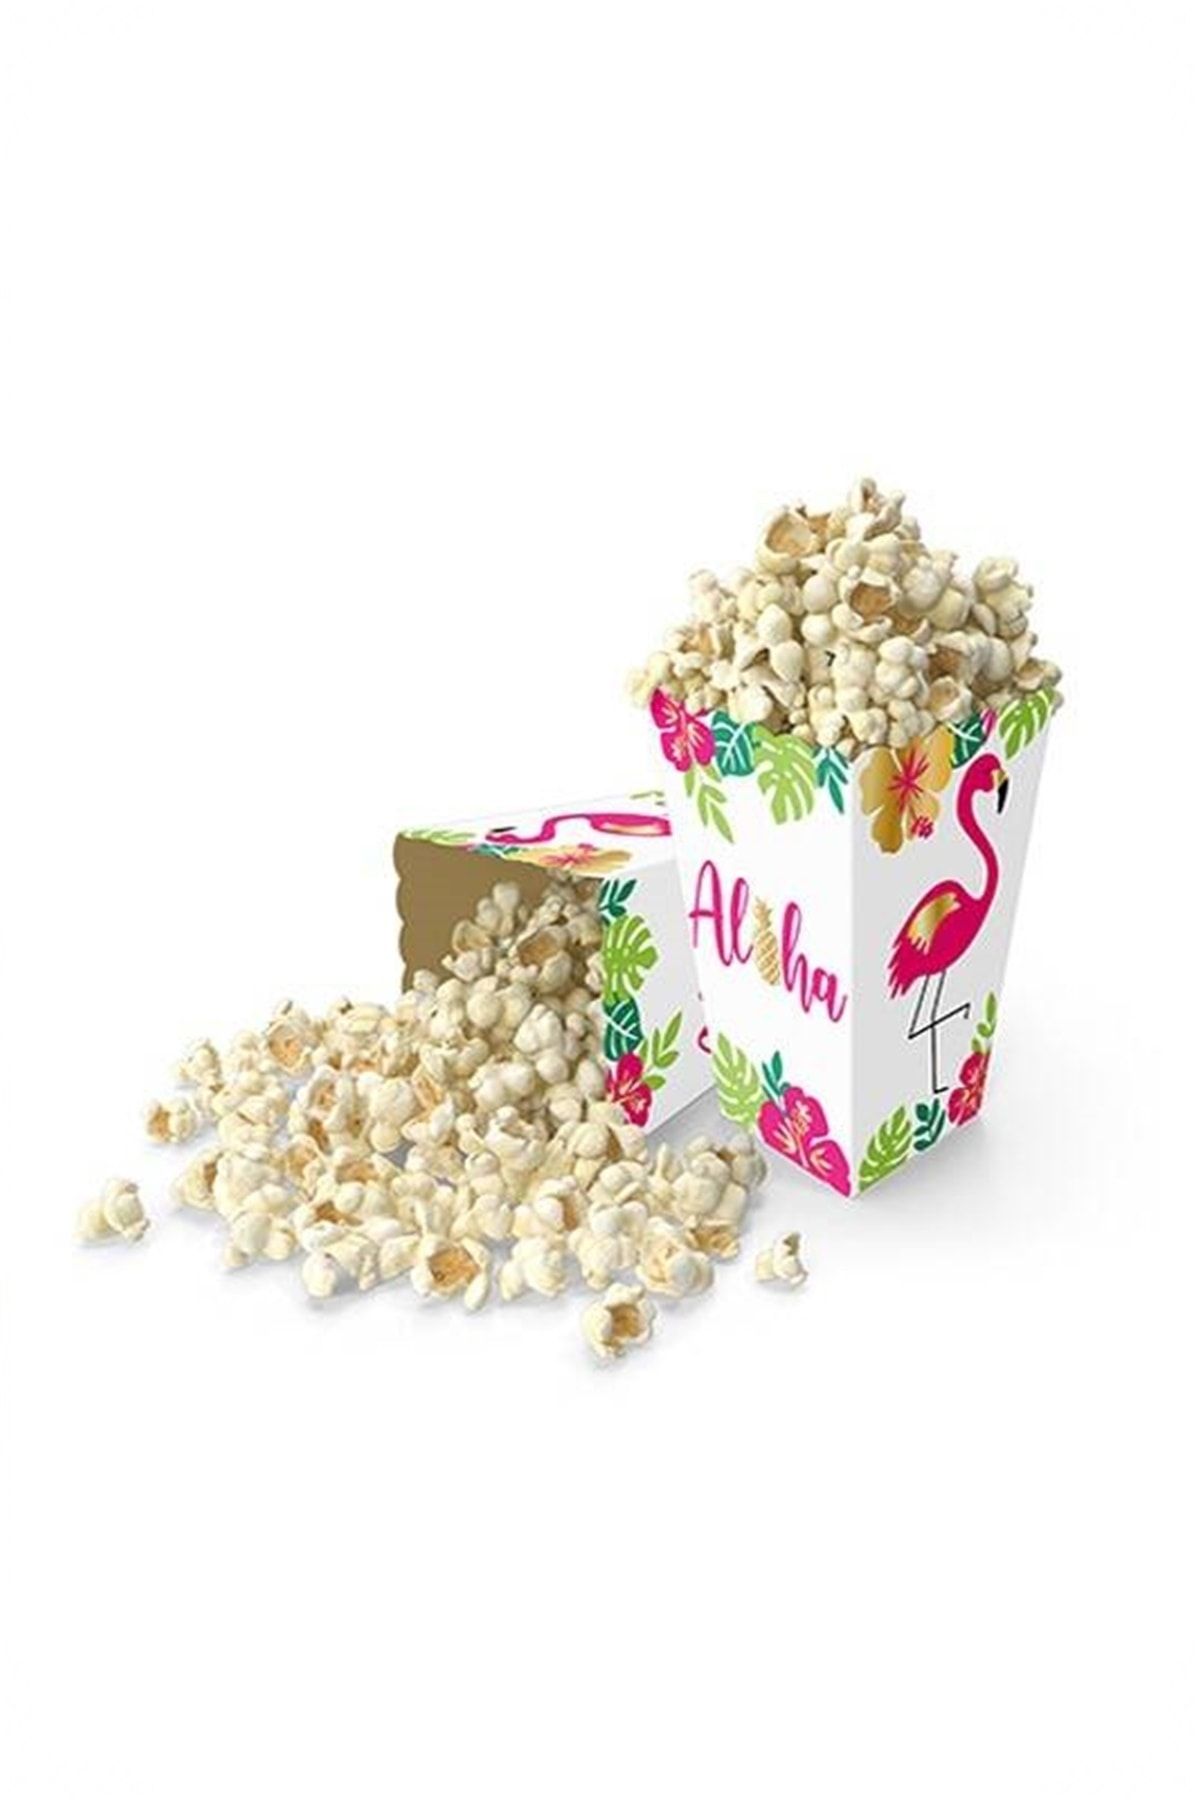 BİDOLUMUTLULUK Popcorn Kutusu  Mısır Cips Kutusu  8 Adet